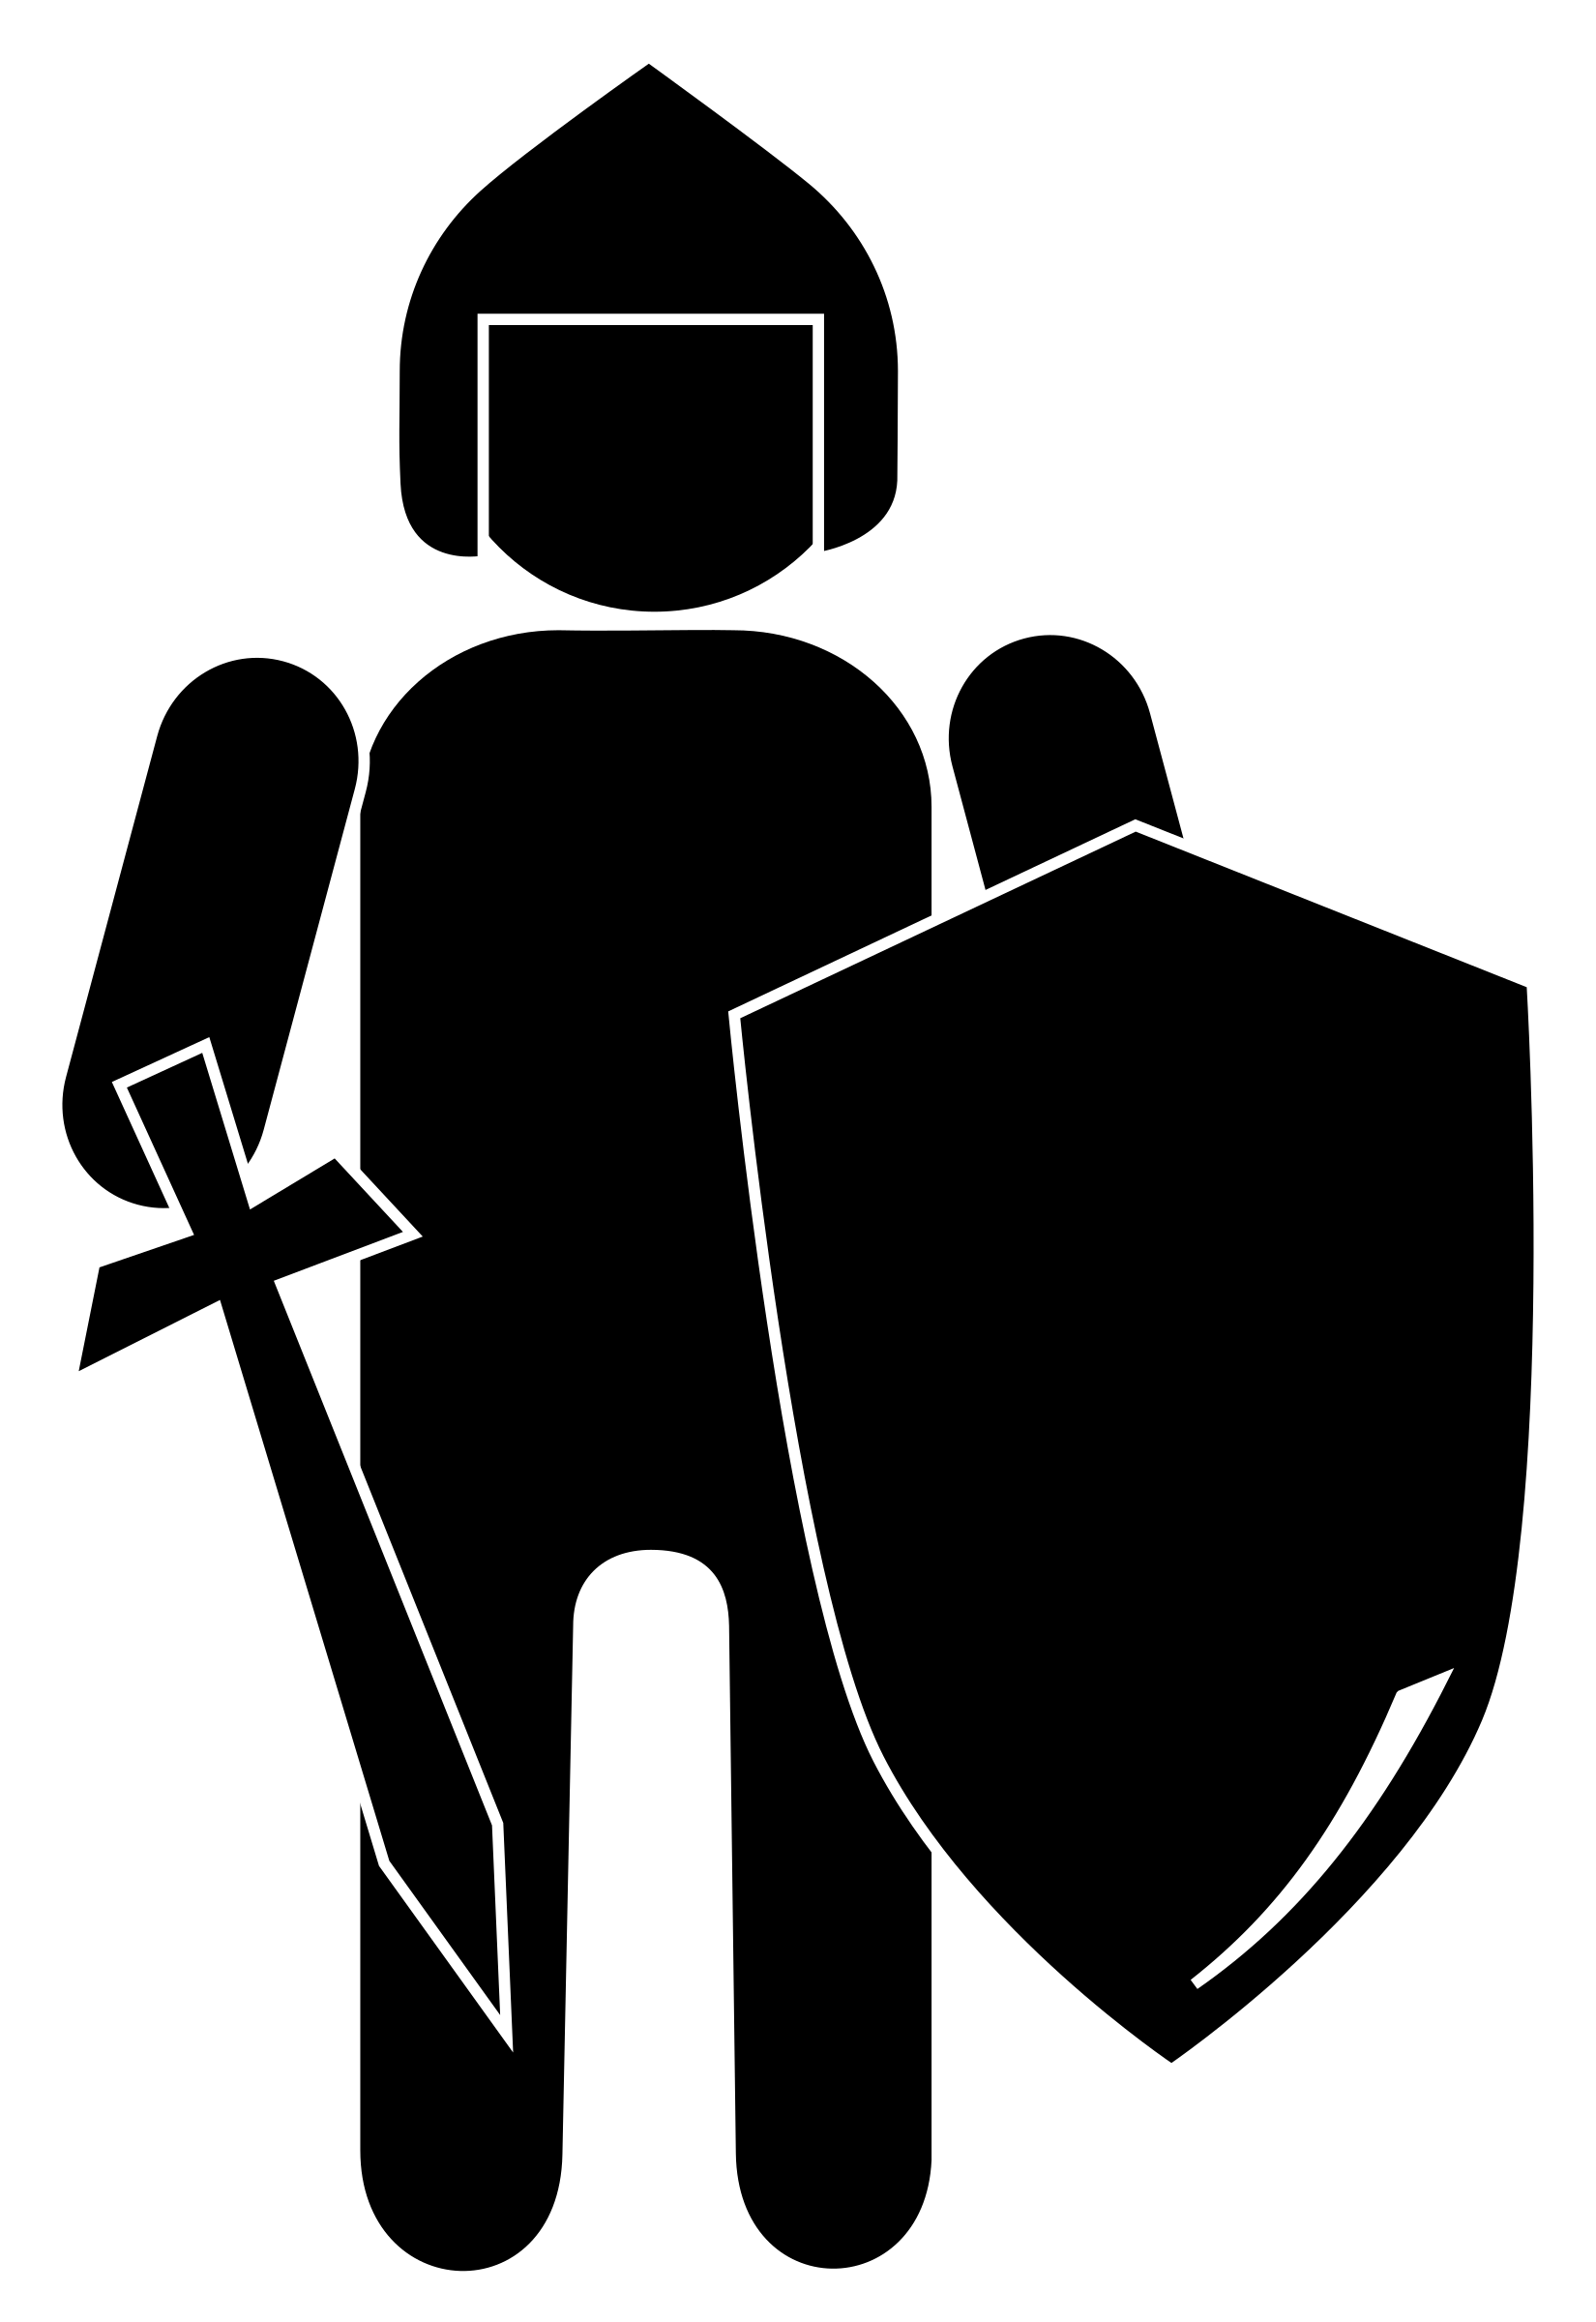 Clipart knight - Clipart Knight